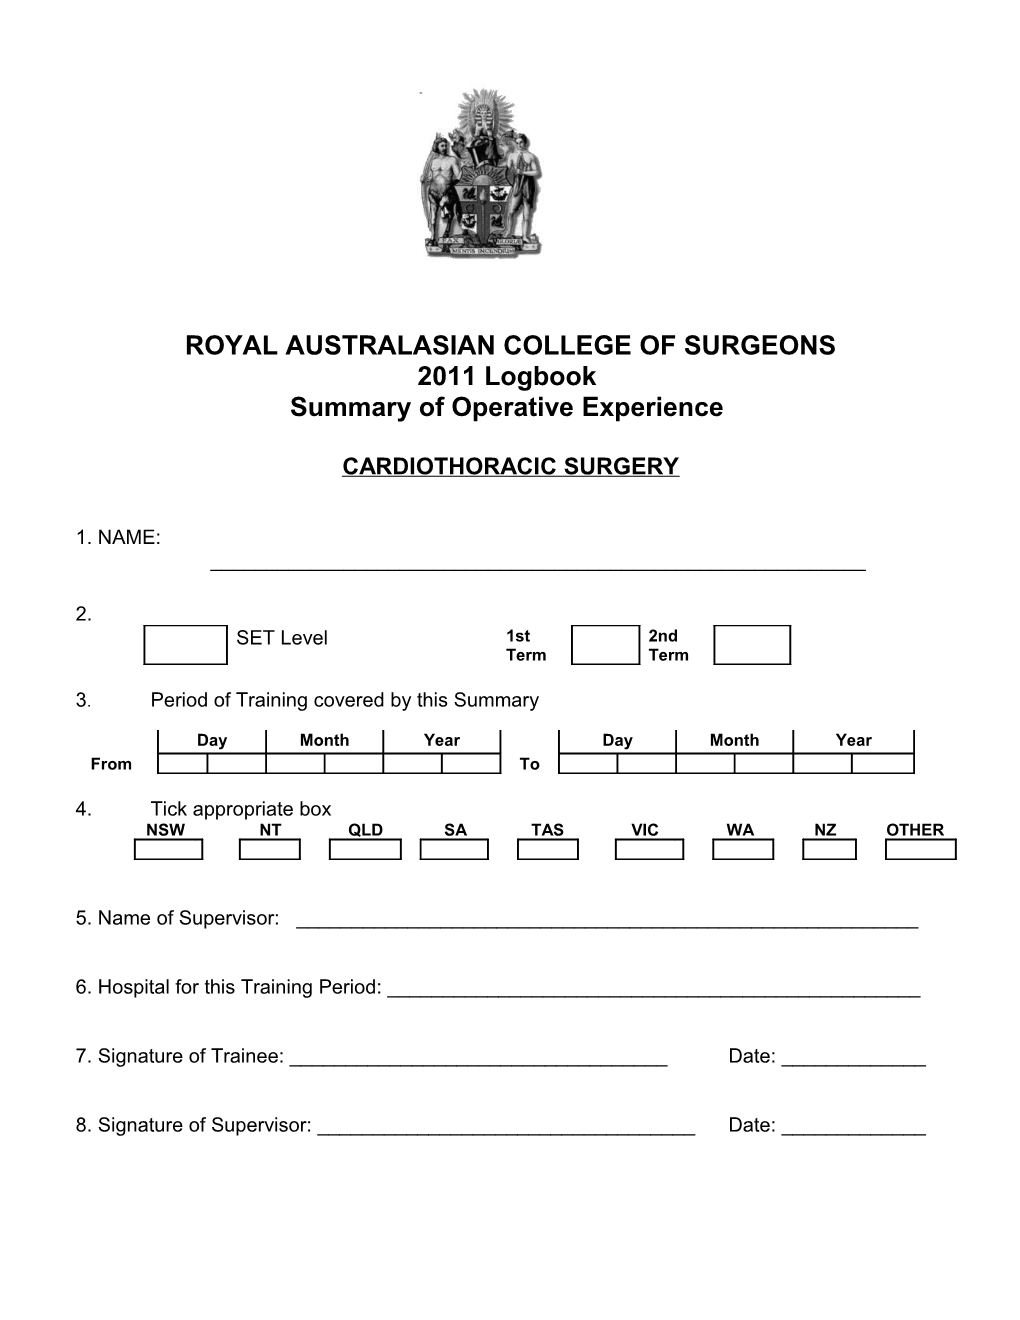 Cardiothoracic Surgical Log Book